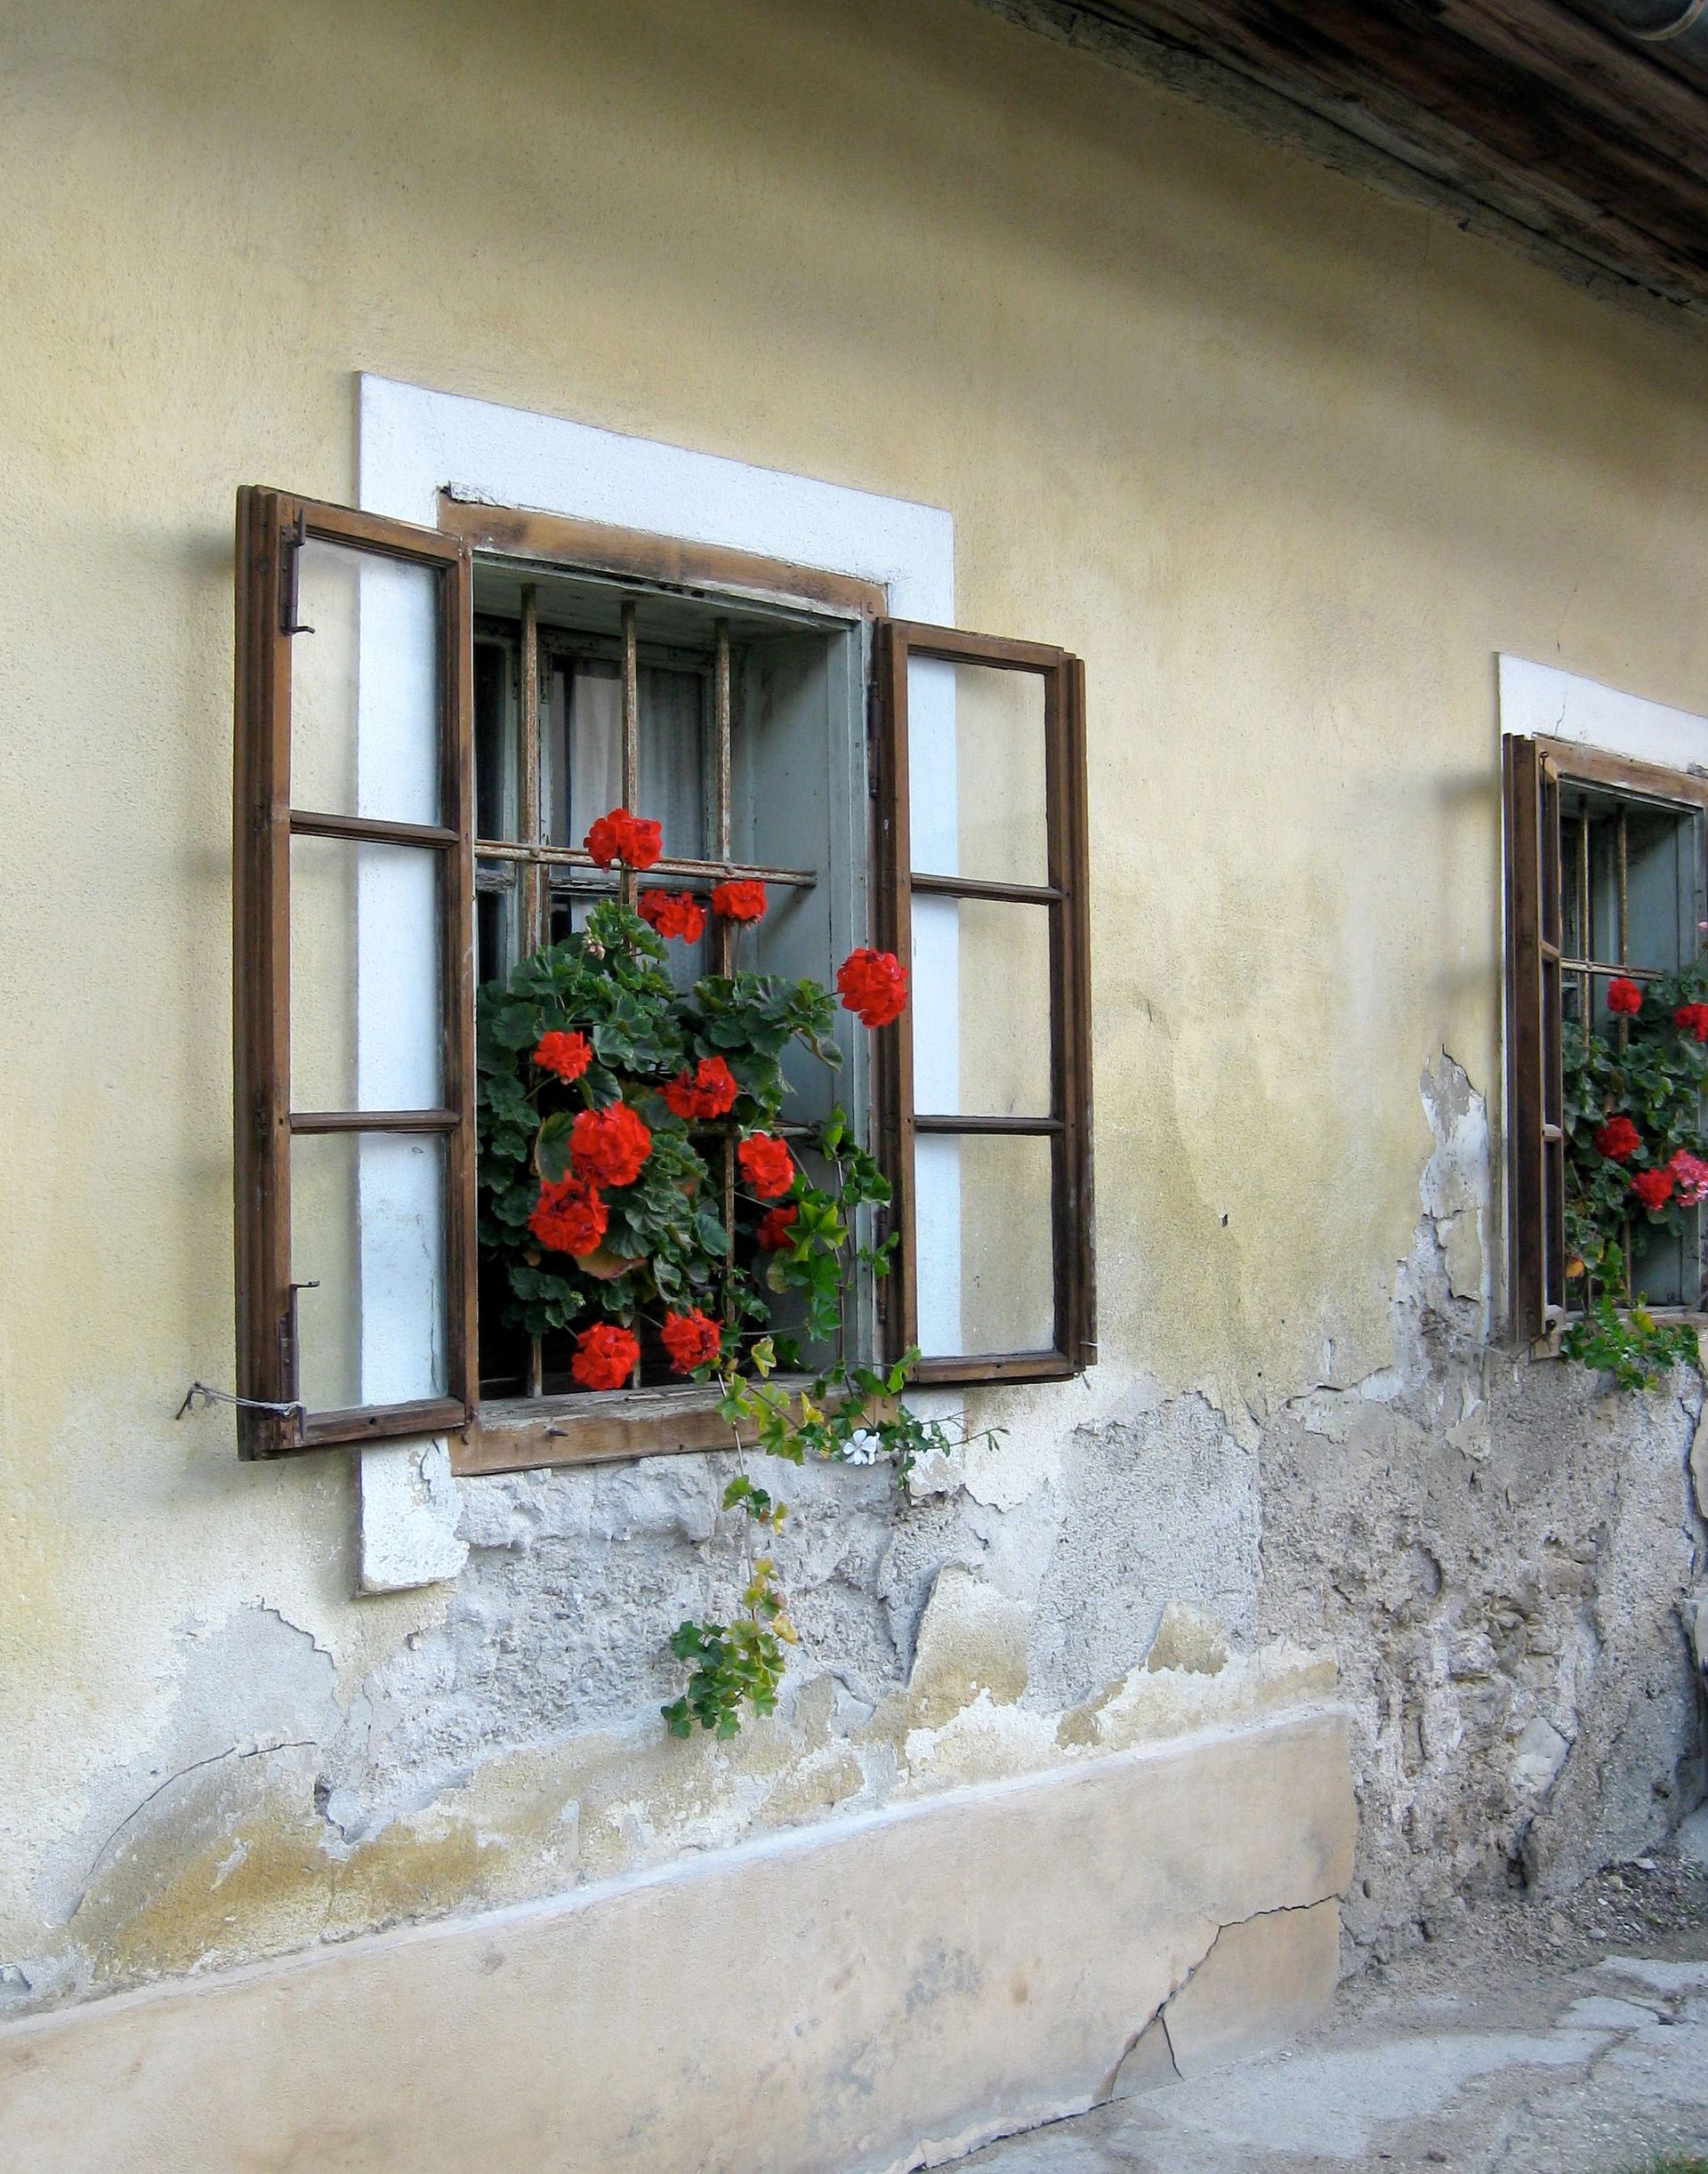 Red flowers growing in a window.  